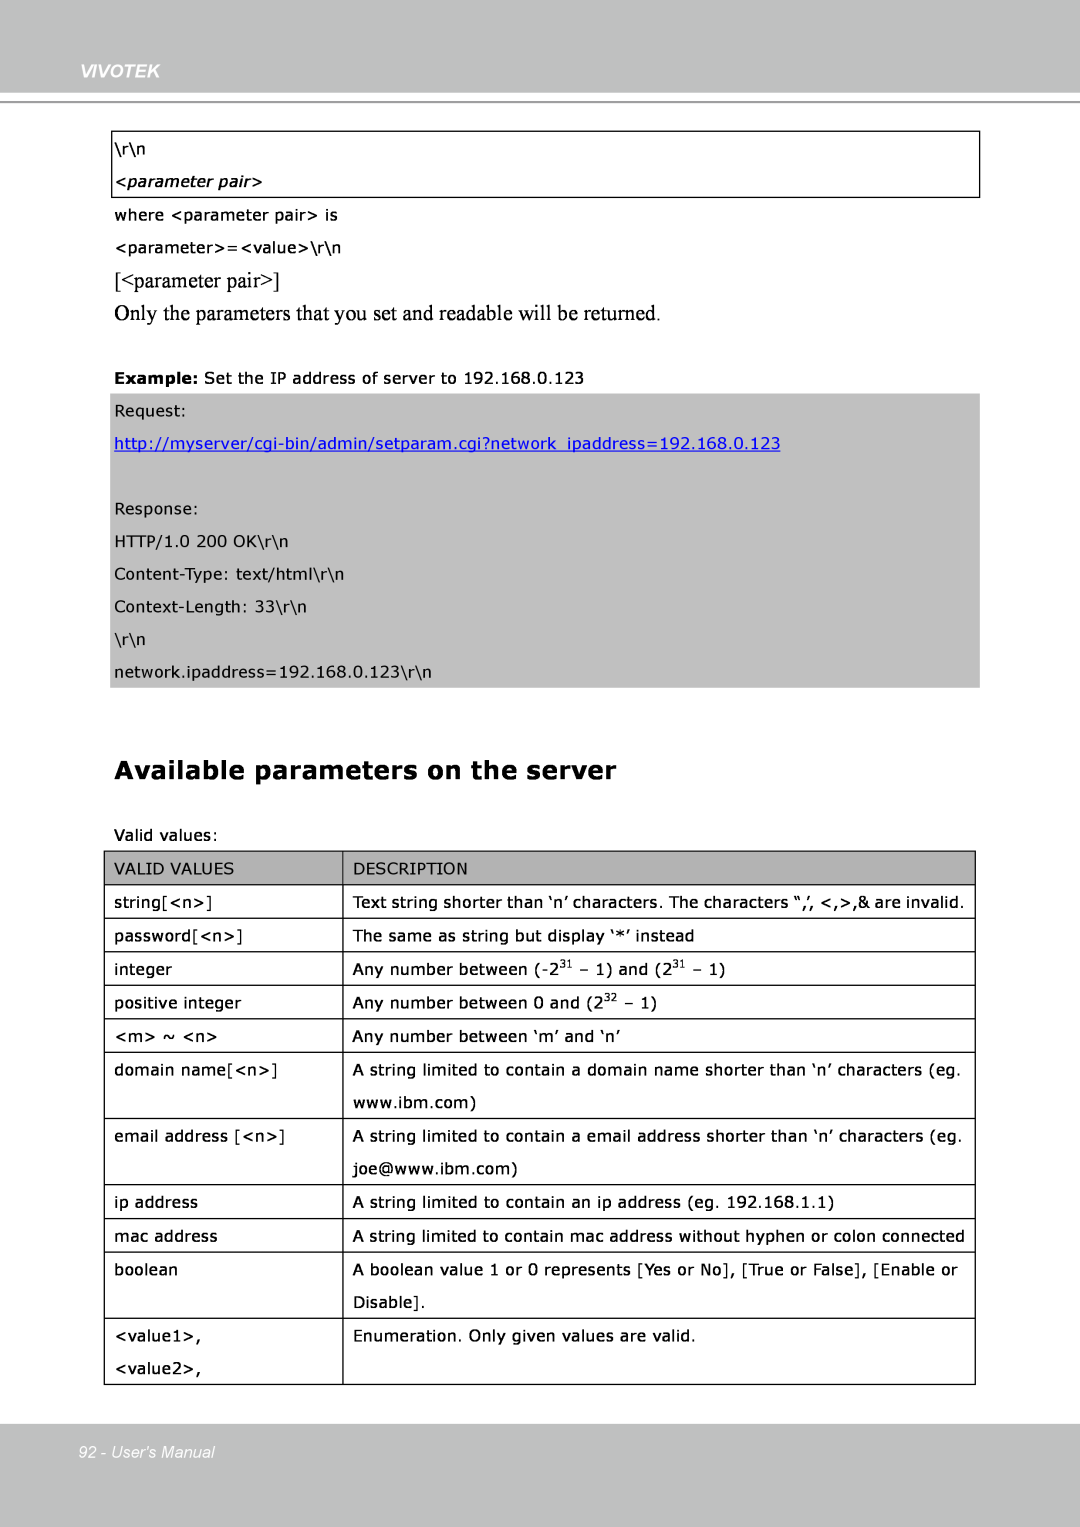 Vivotek PZ7132 manual Available parameters on the server, parameter pair, Vivotek, Users Manual 